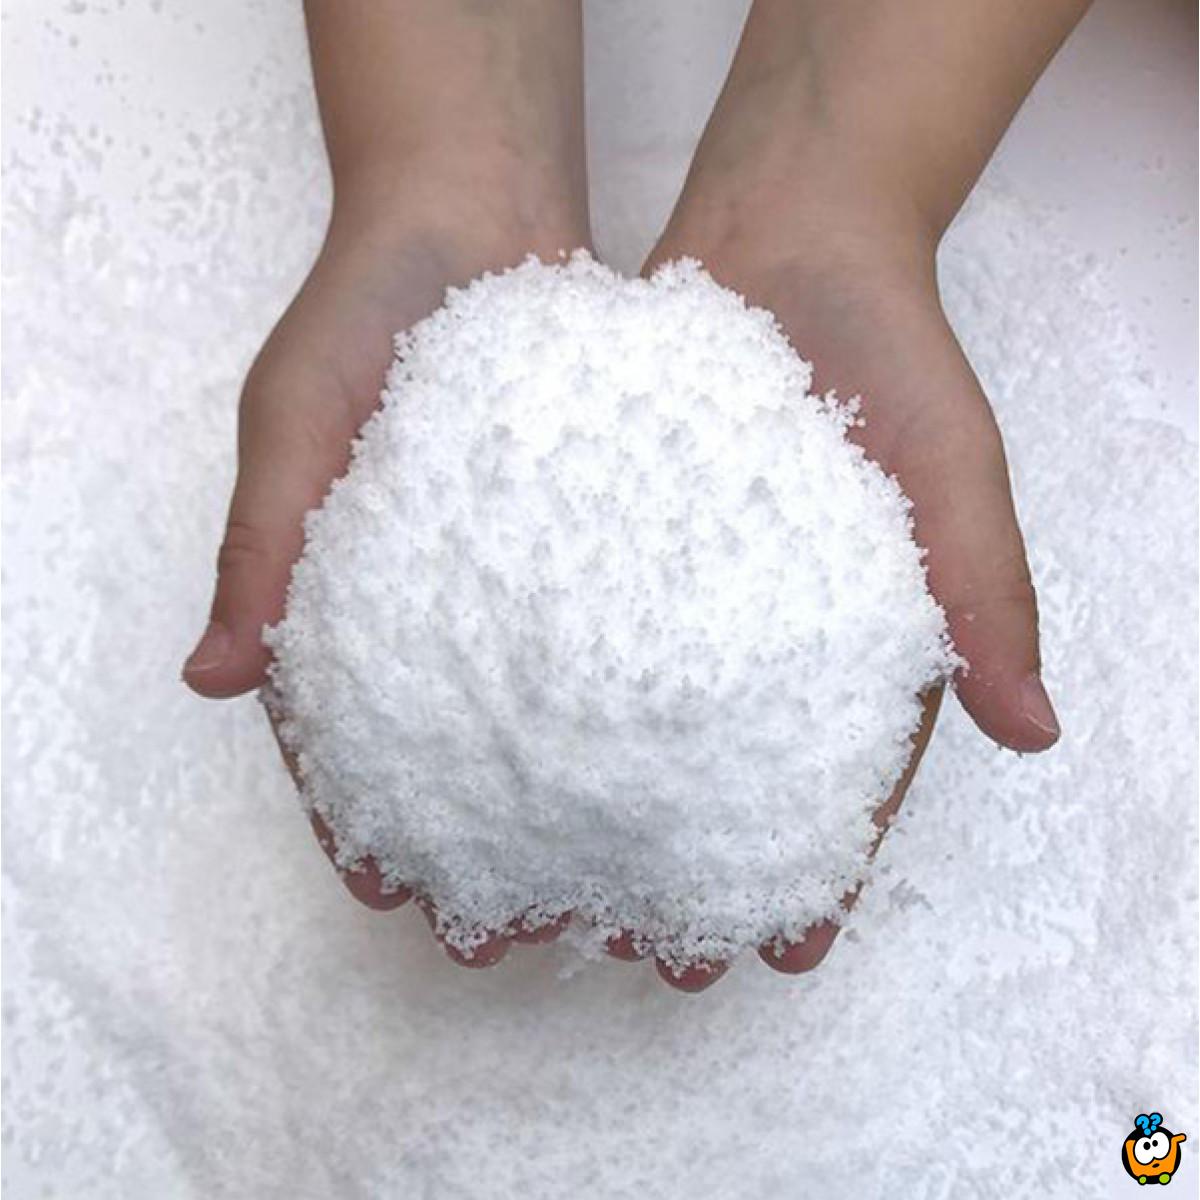  Instant sneg u prahu - dodaj vodu i napravi pahulje 